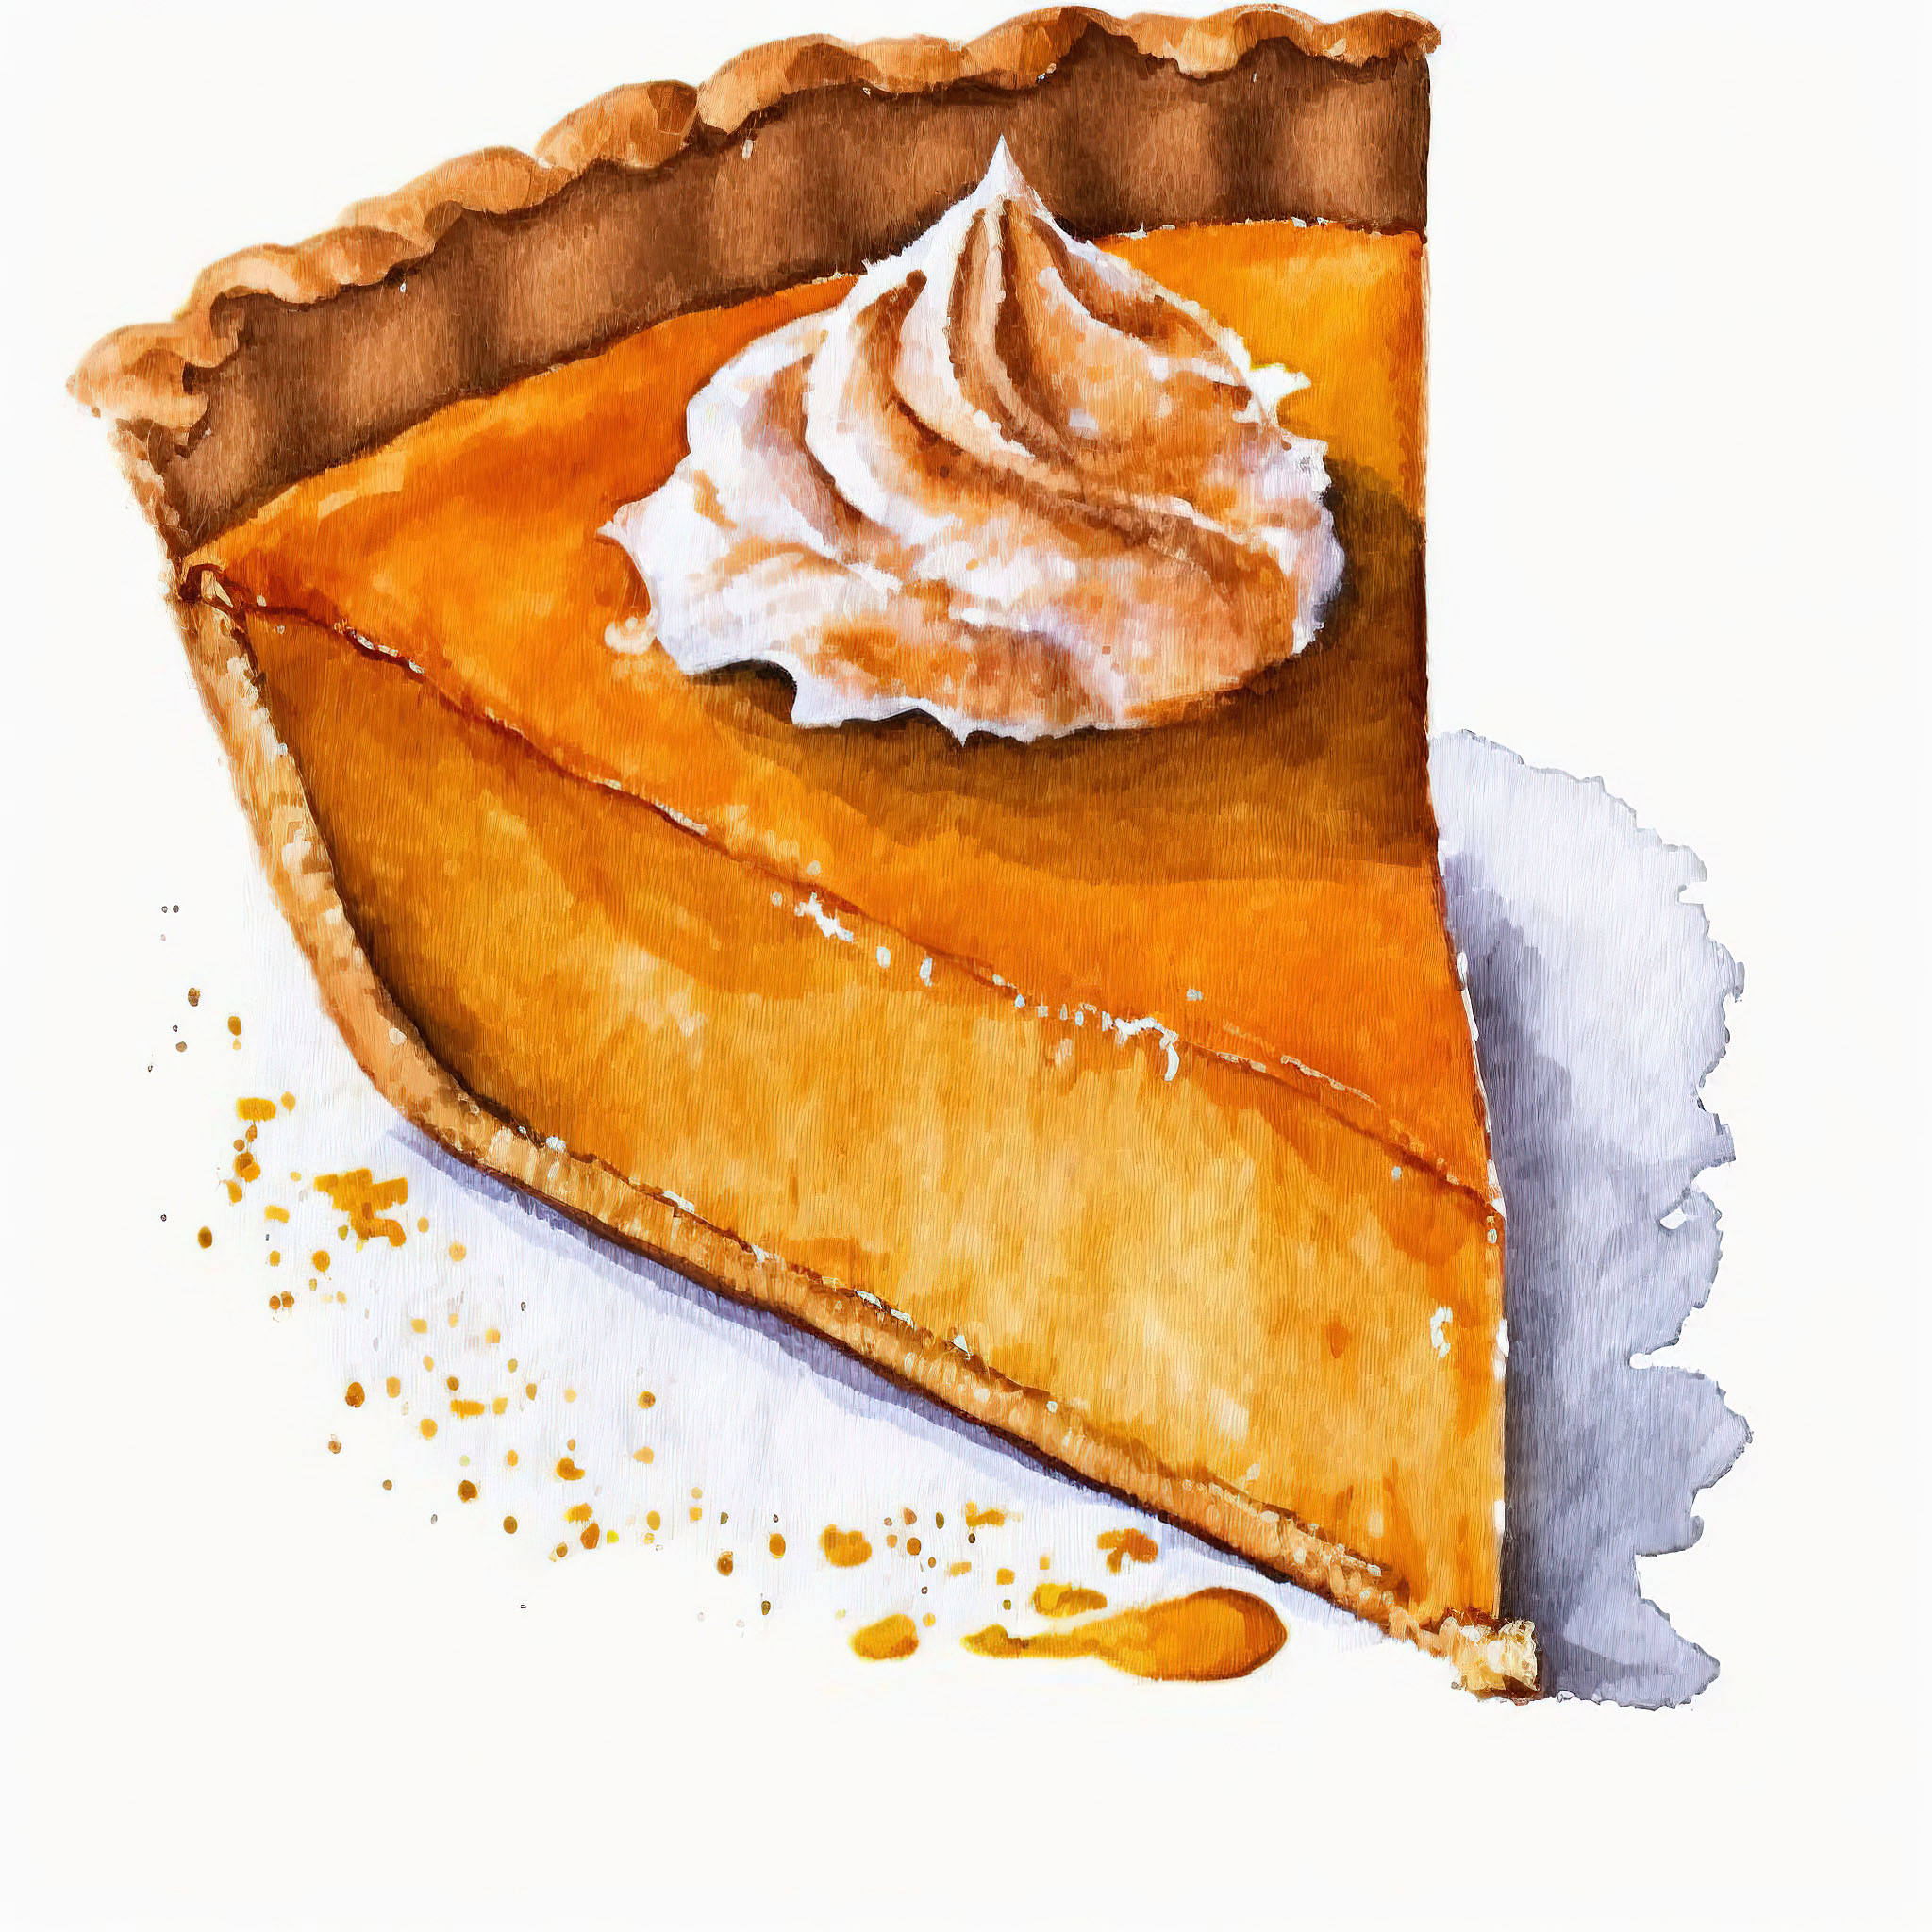 https://thegraphicsfairy.com/wp-content/uploads/2021/10/Pumpkin-Pie-Slice-Image-GraphicsFairy.jpg